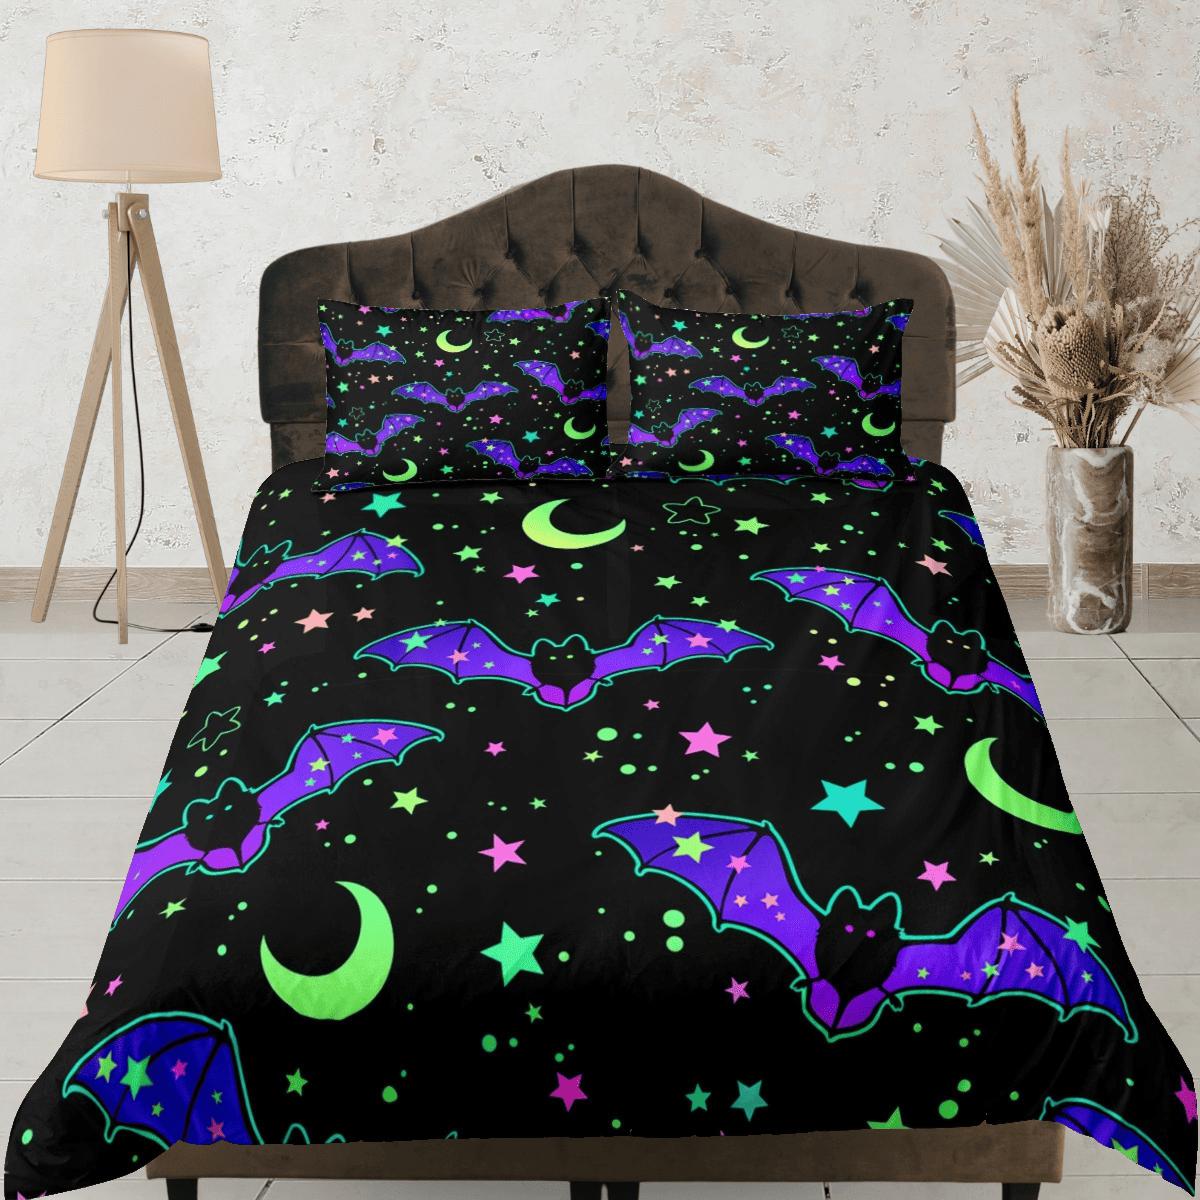 daintyduvet Moon stars and bat 90s neon halloween bedding hippie retro duvet cover, colorful dorm bedding, teens bedroom, adult duvet, toddler bedding